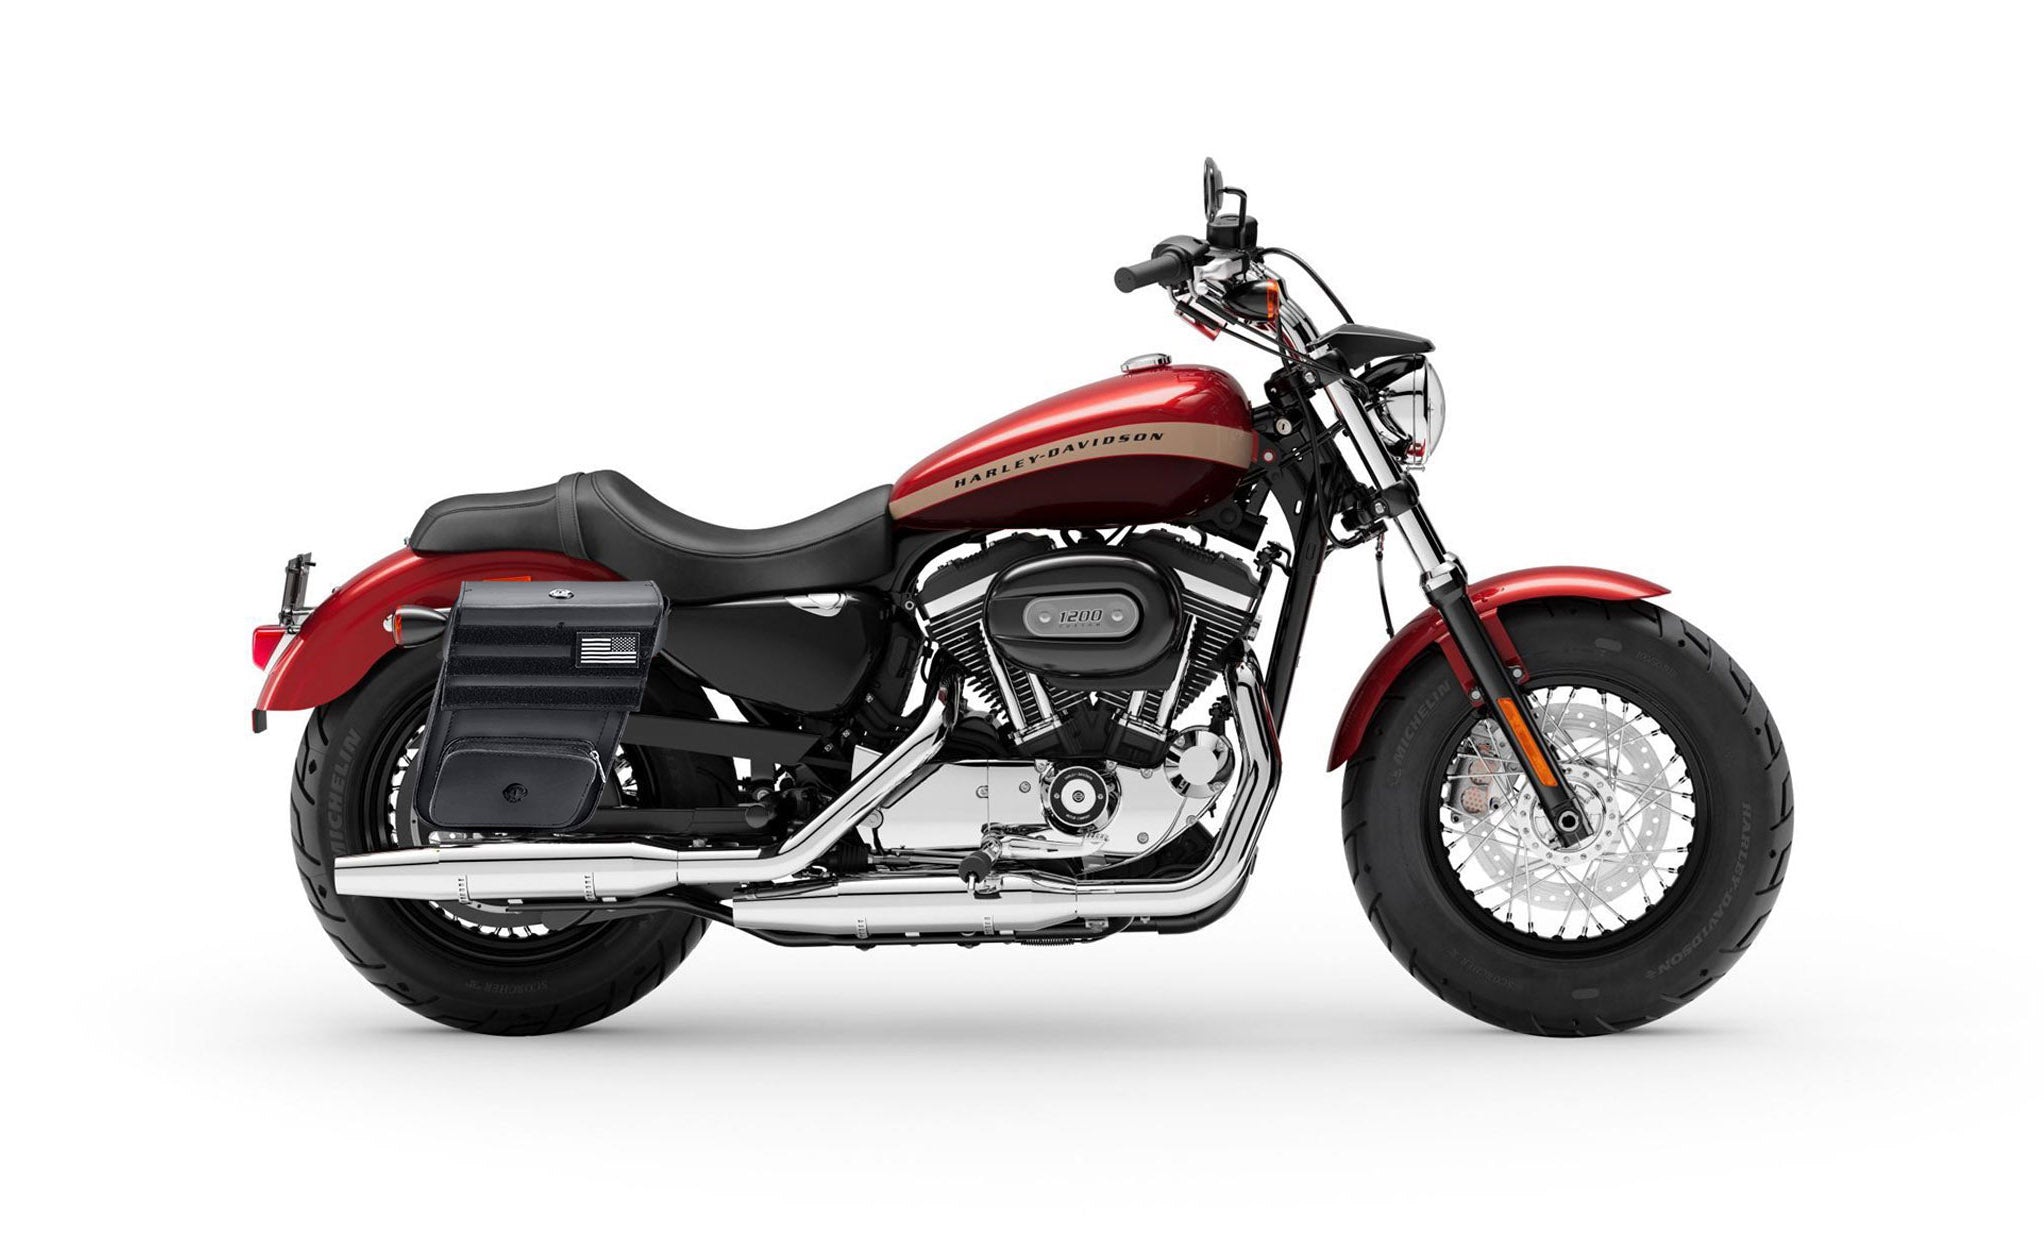 Viking Military Medium Leather Motorcycle Saddlebags For Harley Sportster 1200 Custom Xl1200C Xlh1200C on Bike Photo @expand